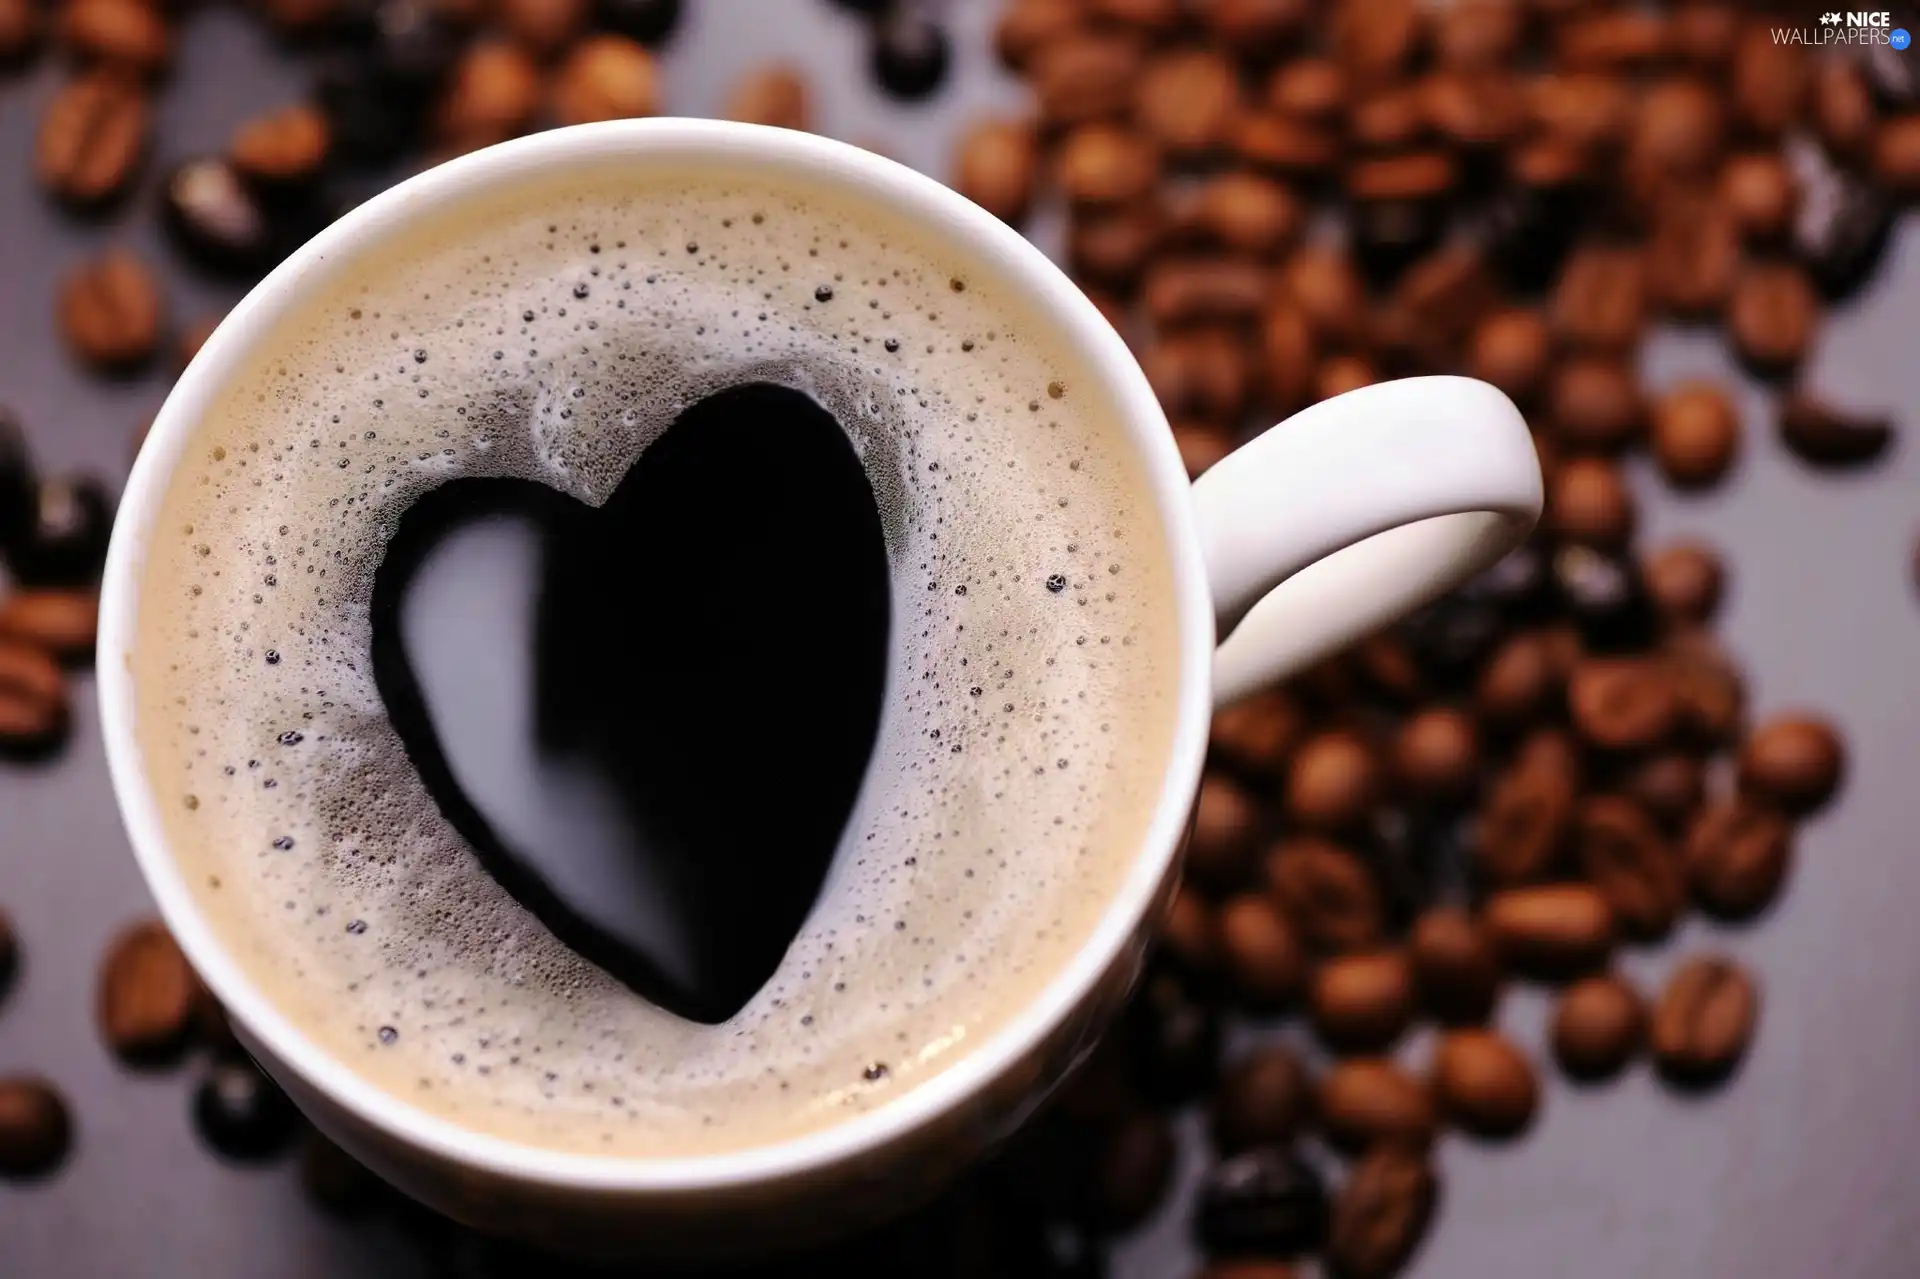 Heart teddybear, coffee, cup